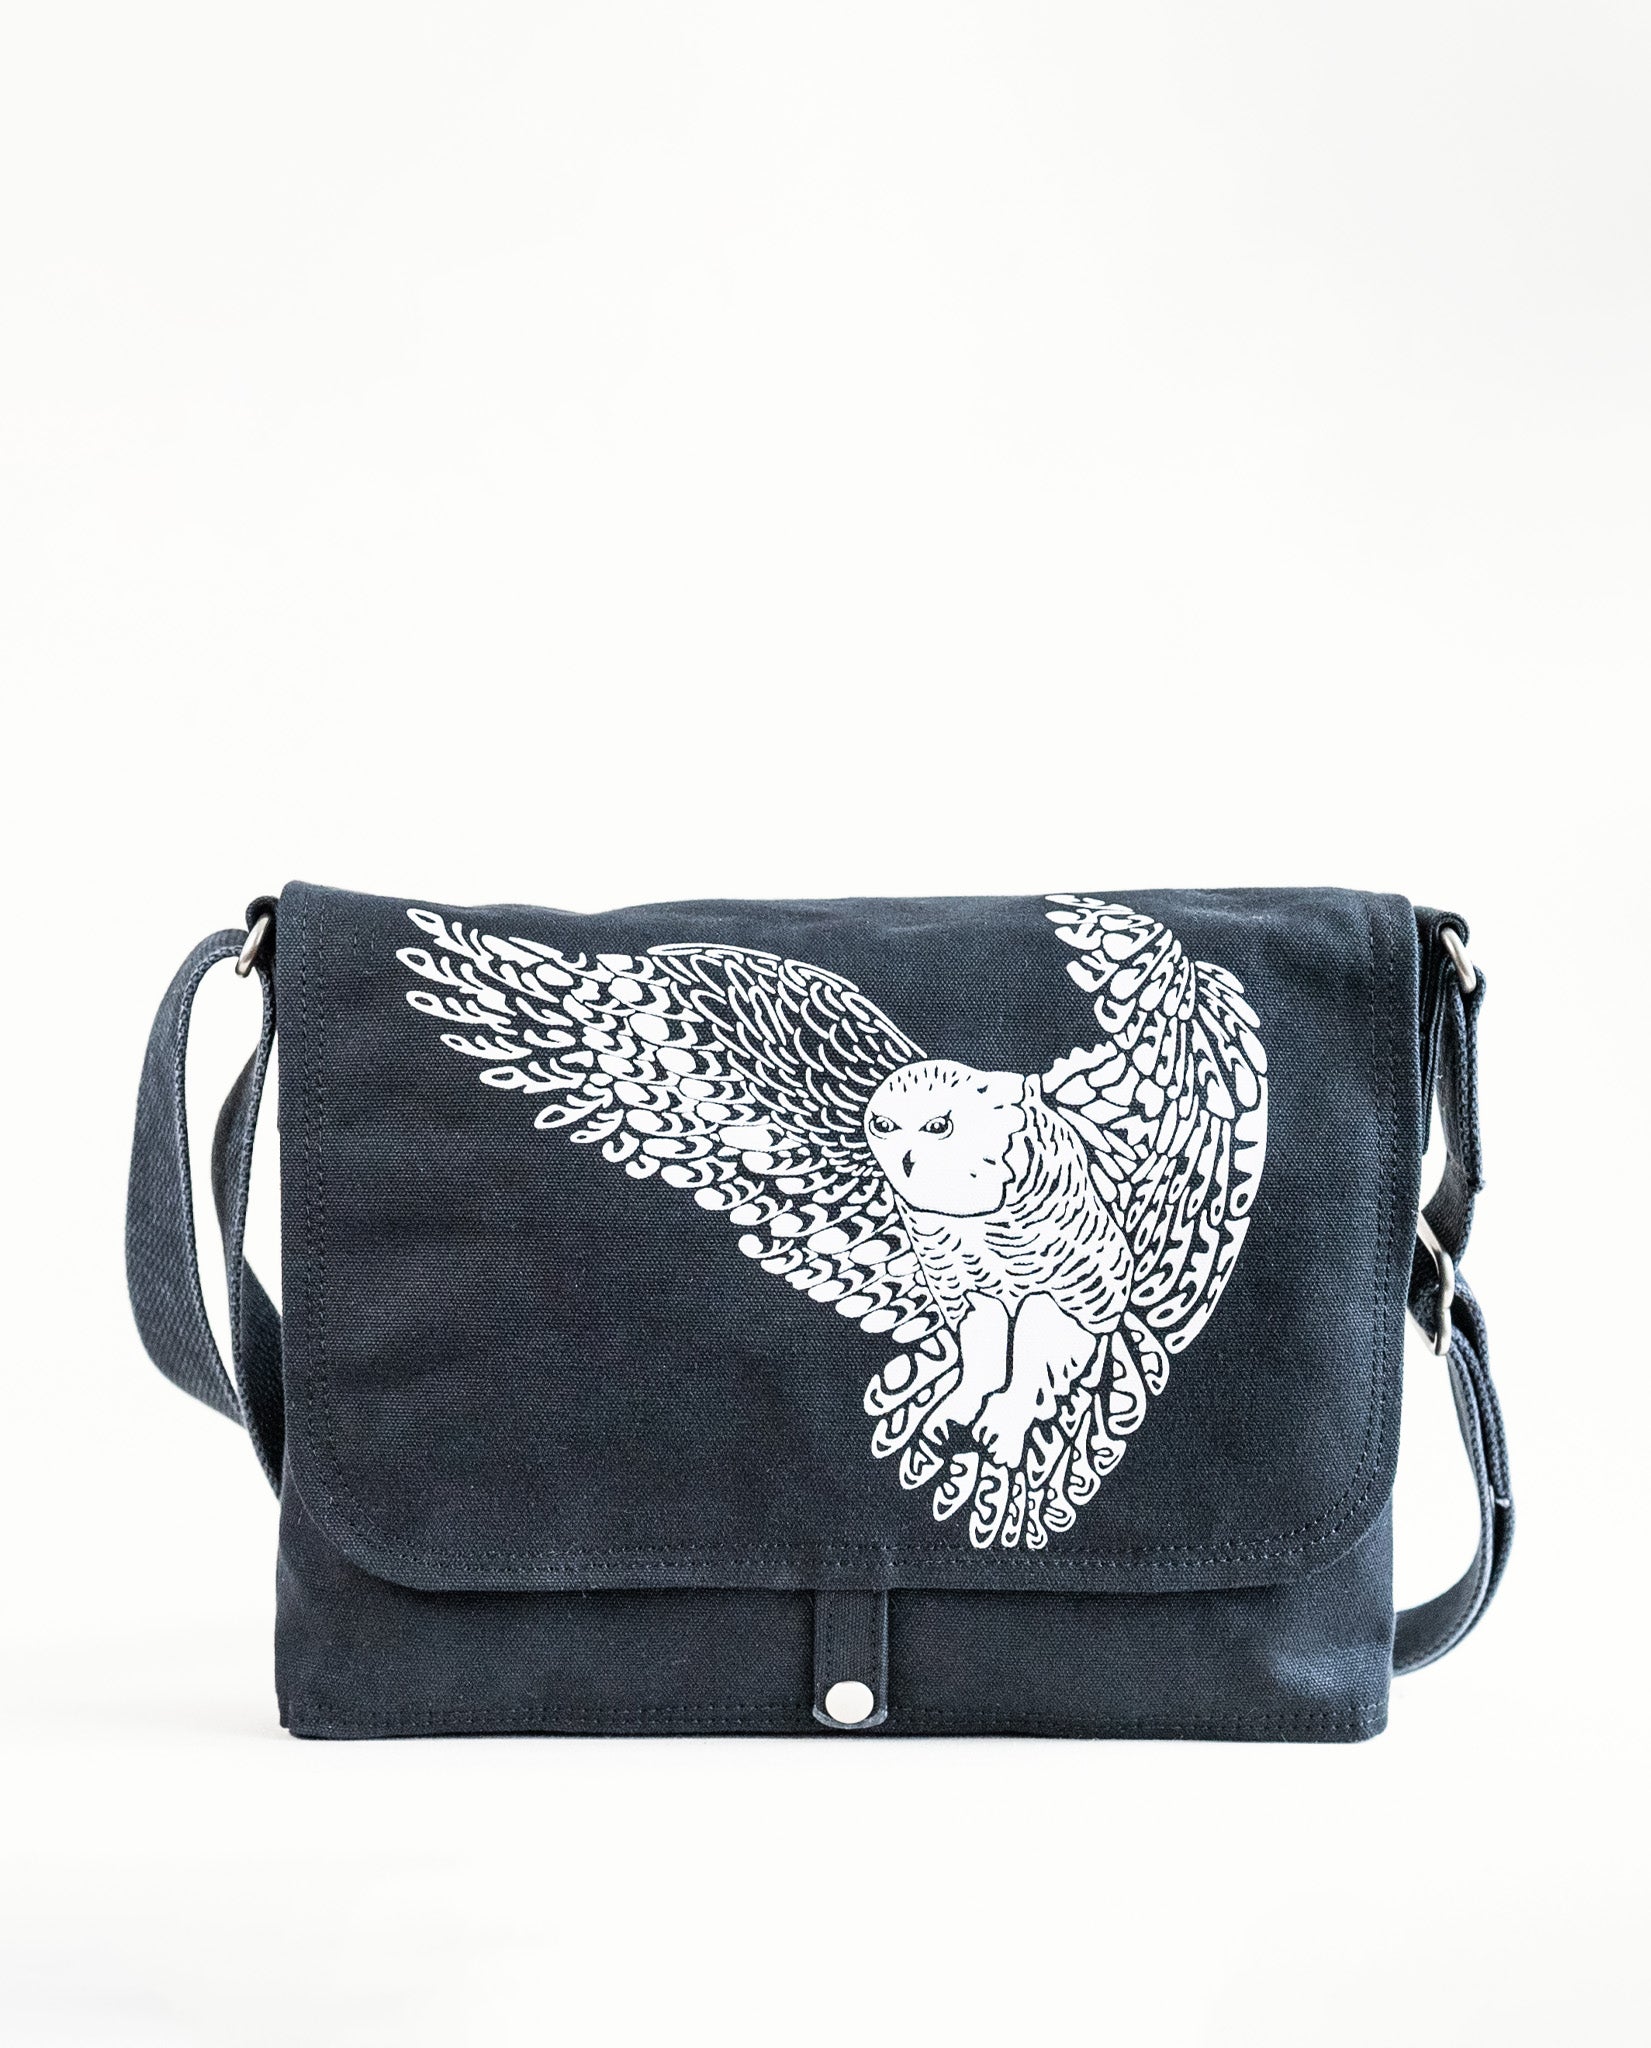 Front exterior of Dock 5’s Snowy Owl Canvas Messenger Bag in black featuring art from owner Natalija Walbridge